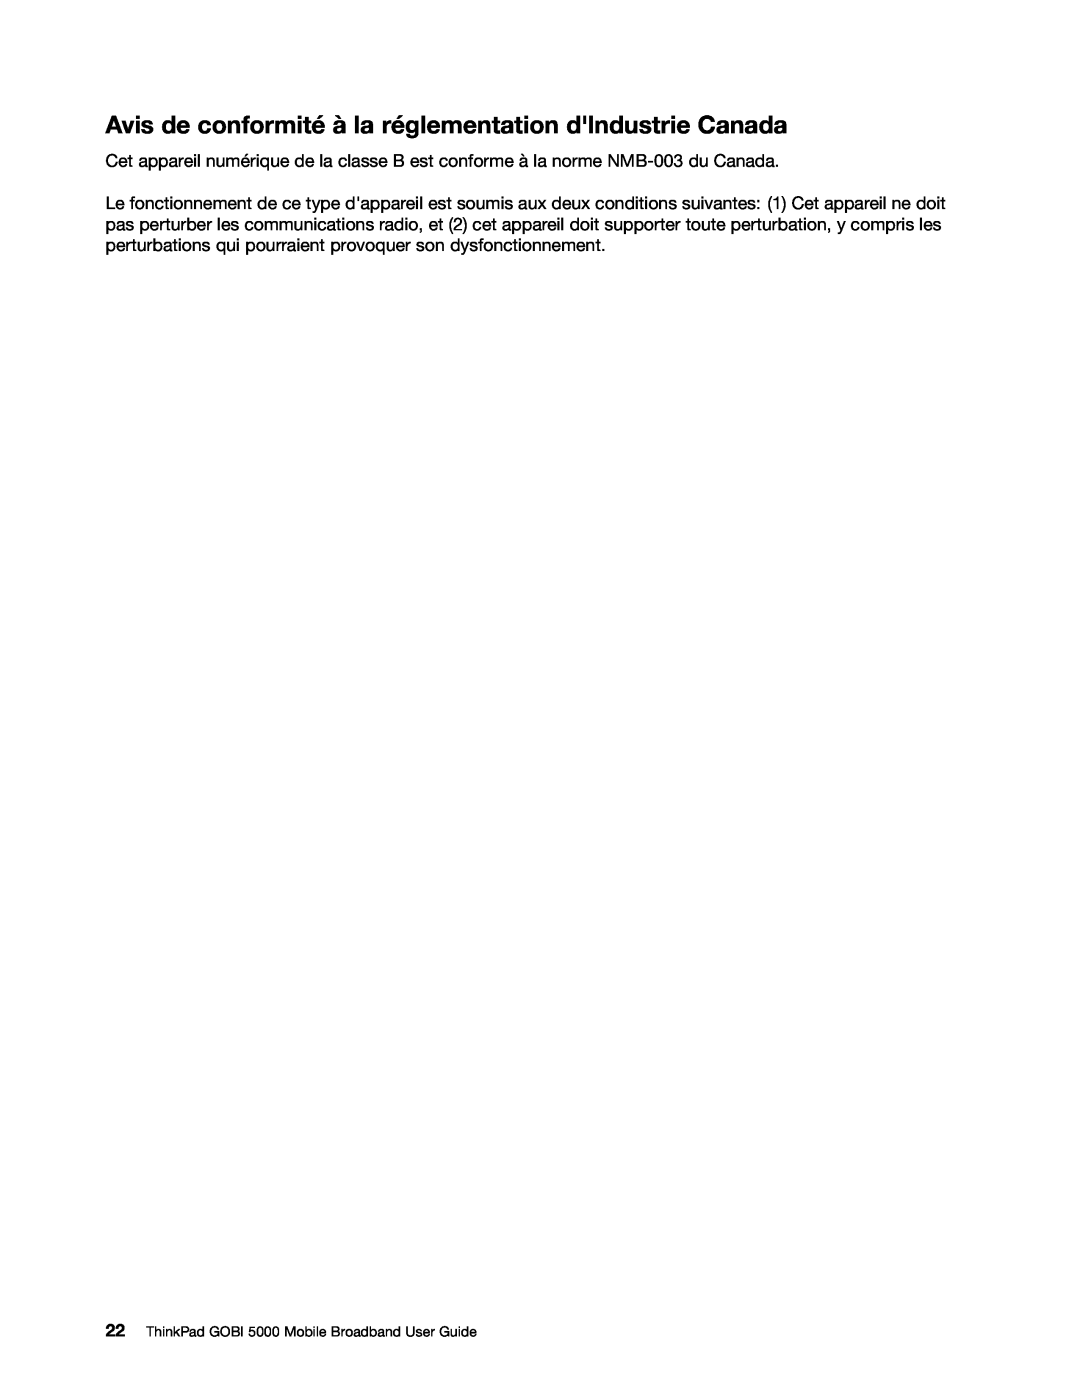 Lenovo manual Avis de conformité à la réglementation dlndustrie Canada, ThinkPad GOBI 5000 Mobile Broadband User Guide 